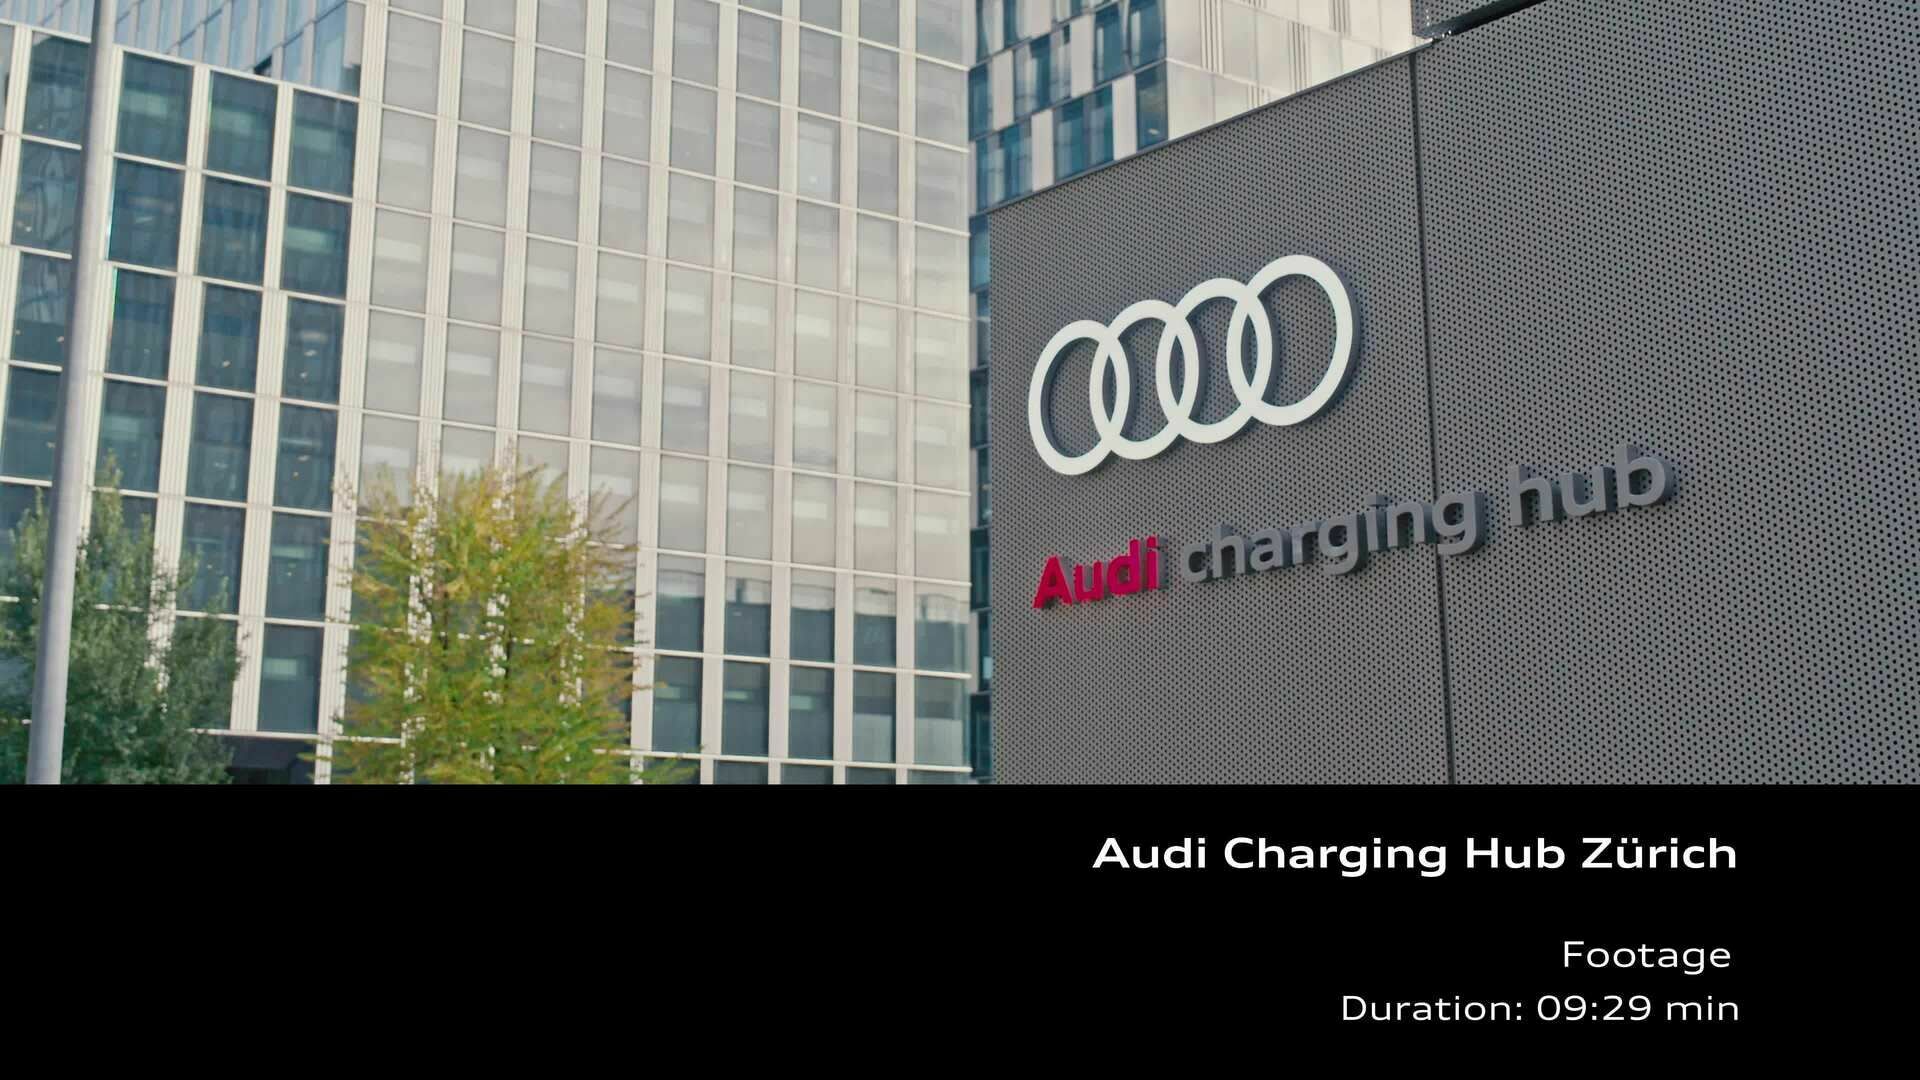 Footage: Audi Charging Hub Zürich